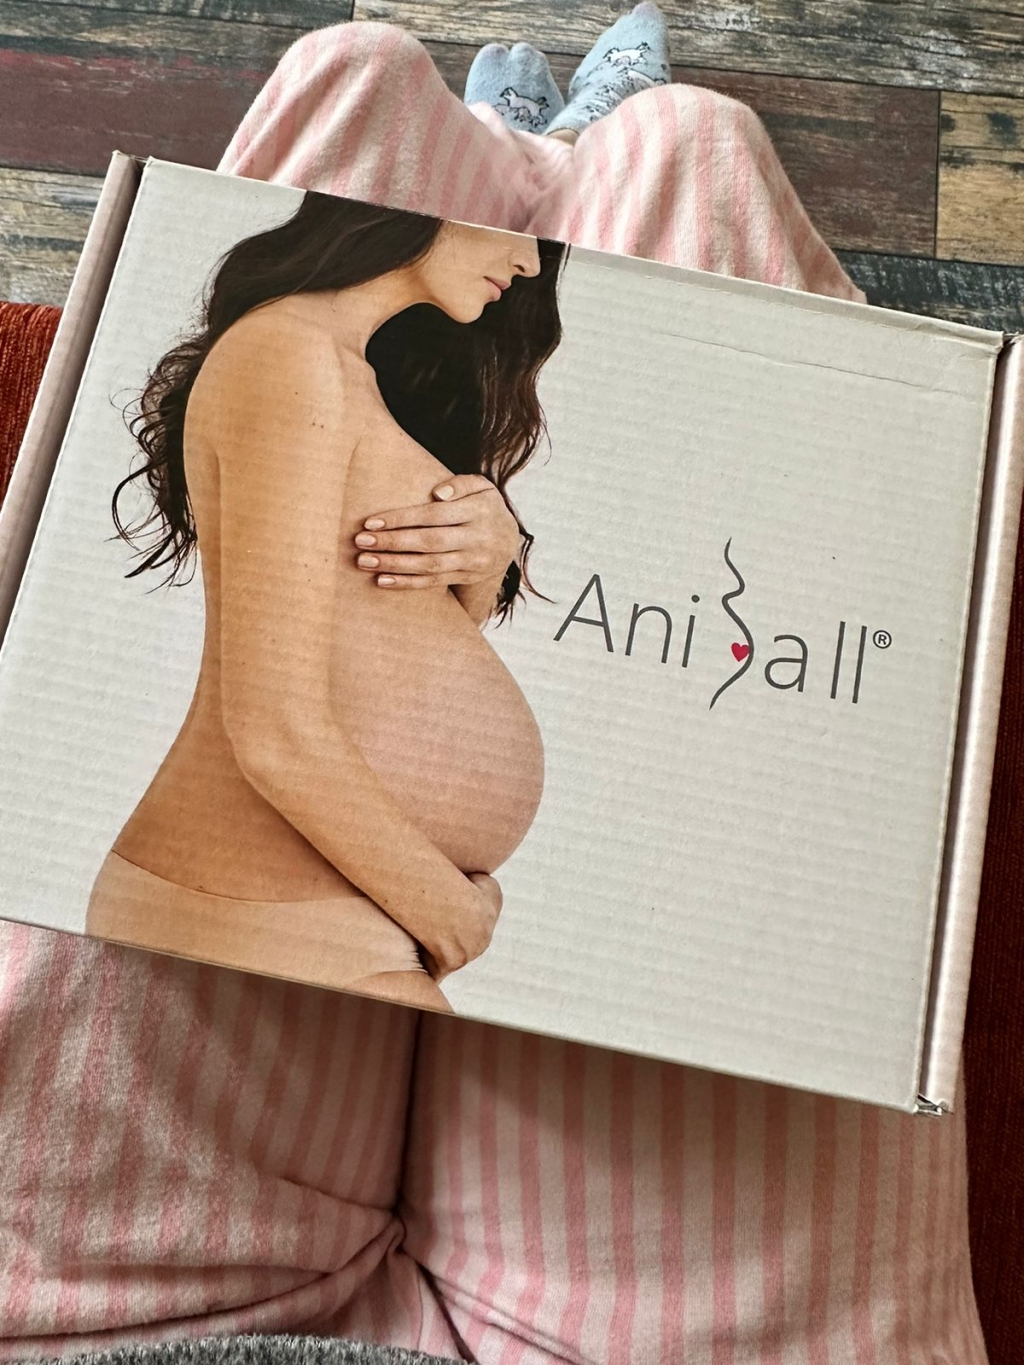 Aniball - Аппарат для укрепления мышц и профилактики травм при родах